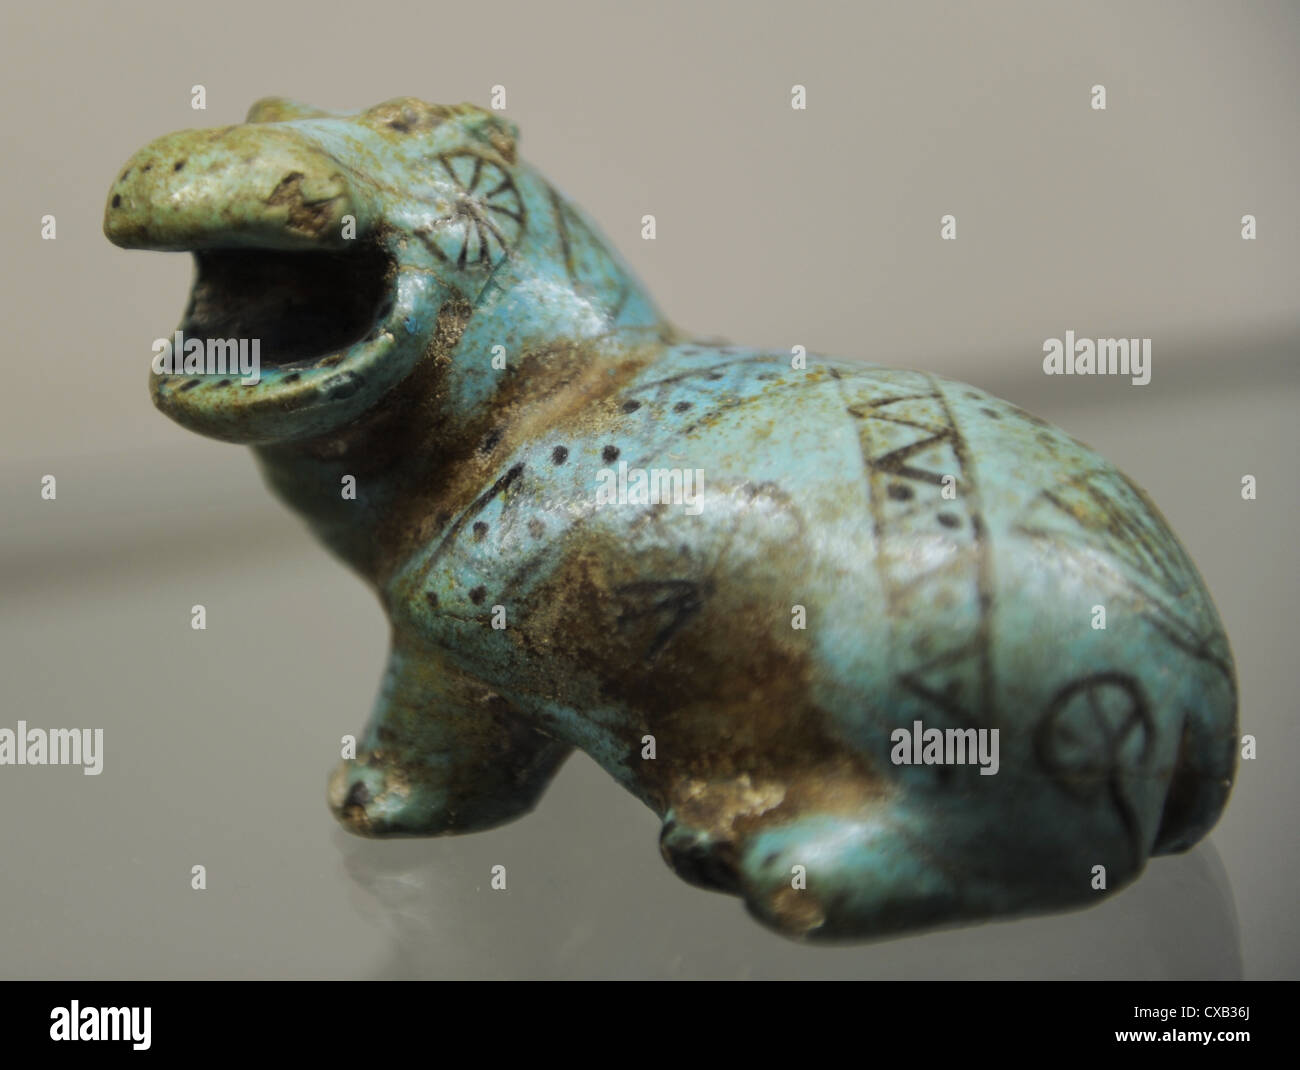 Roaring hippopotamus. Egyptian faience. Origin unknown. 12th-17th Dynasties. C. 1990-1550 BC. Carlsberg Glyptotek. Copenhagen. Stock Photo